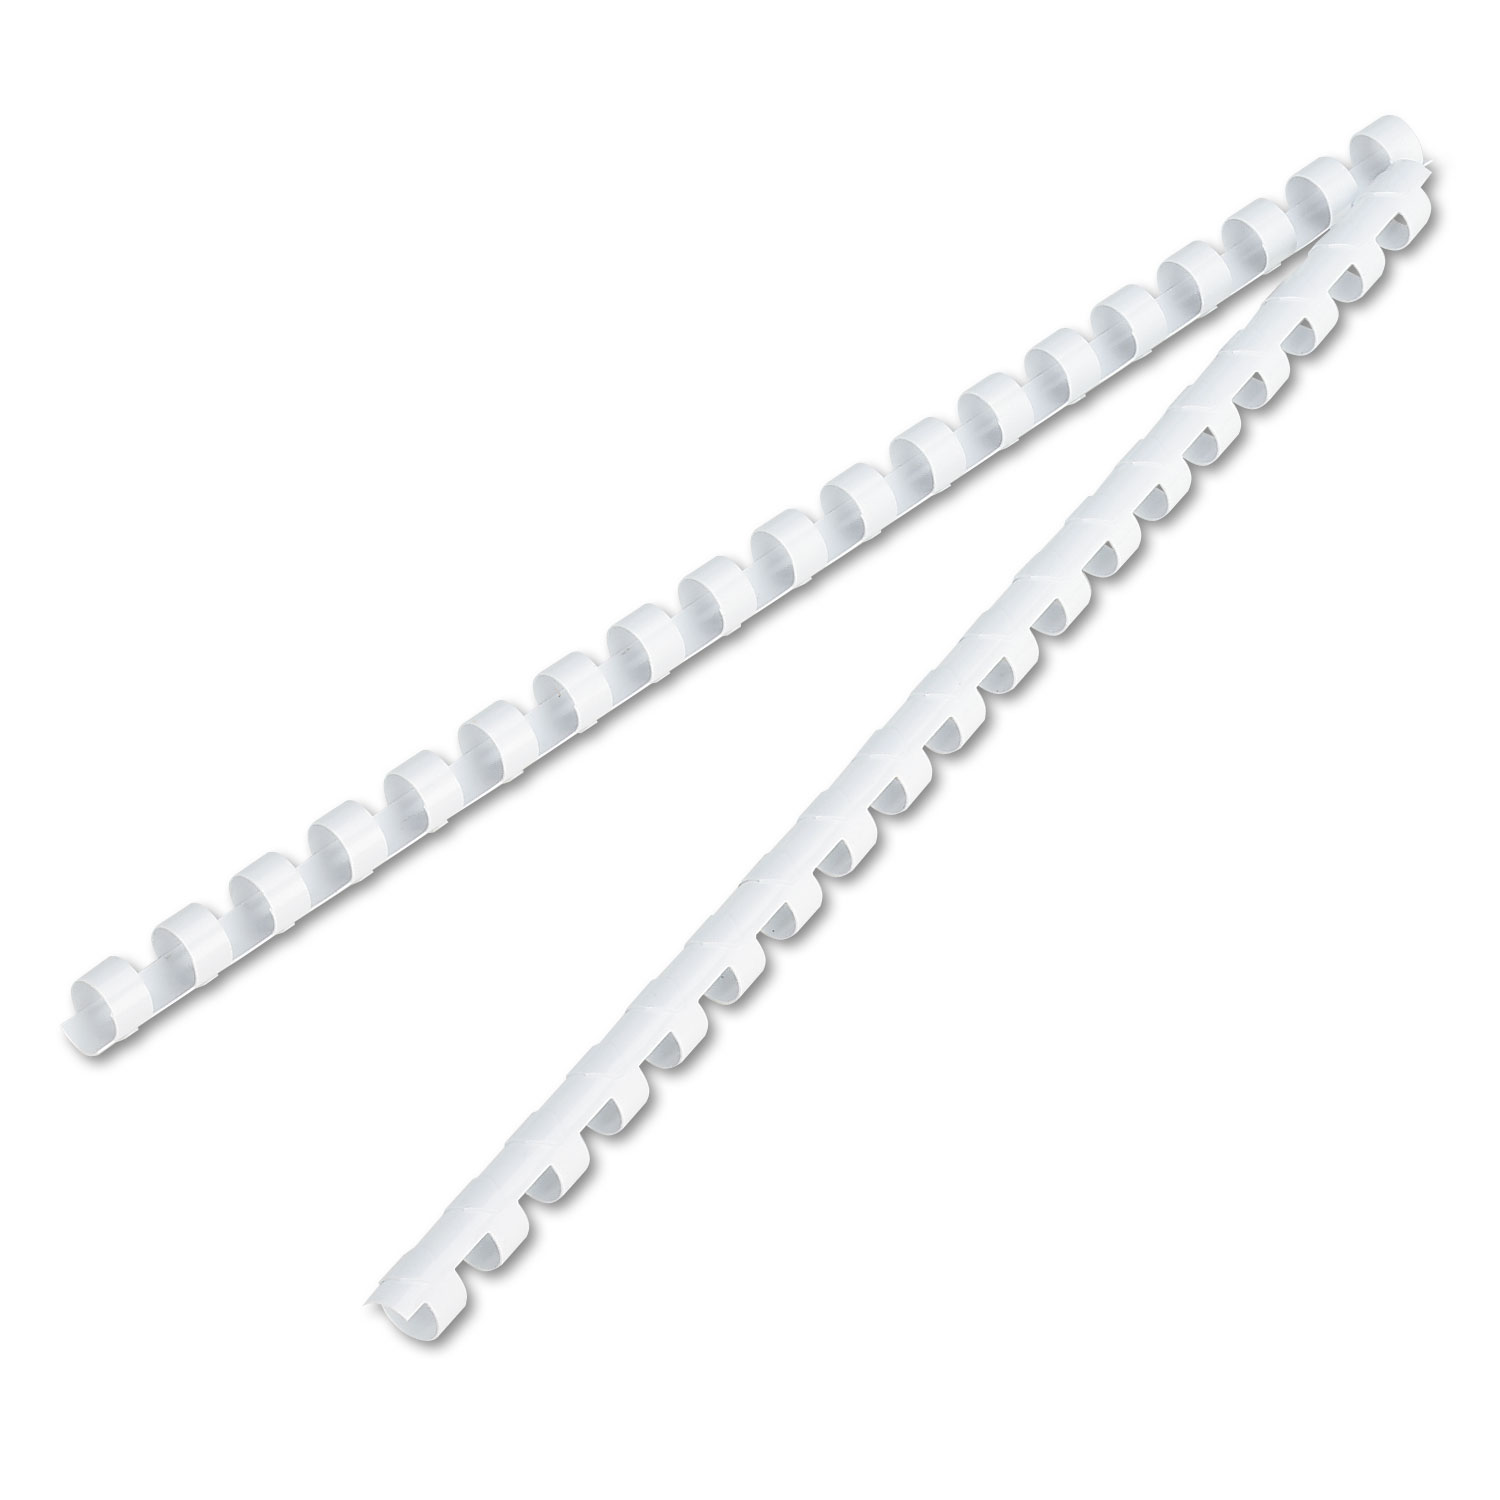 Plastic Comb Bindings, 3/8 Diameter, 55 Sheet Capacity, White, 100 Combs/Pack